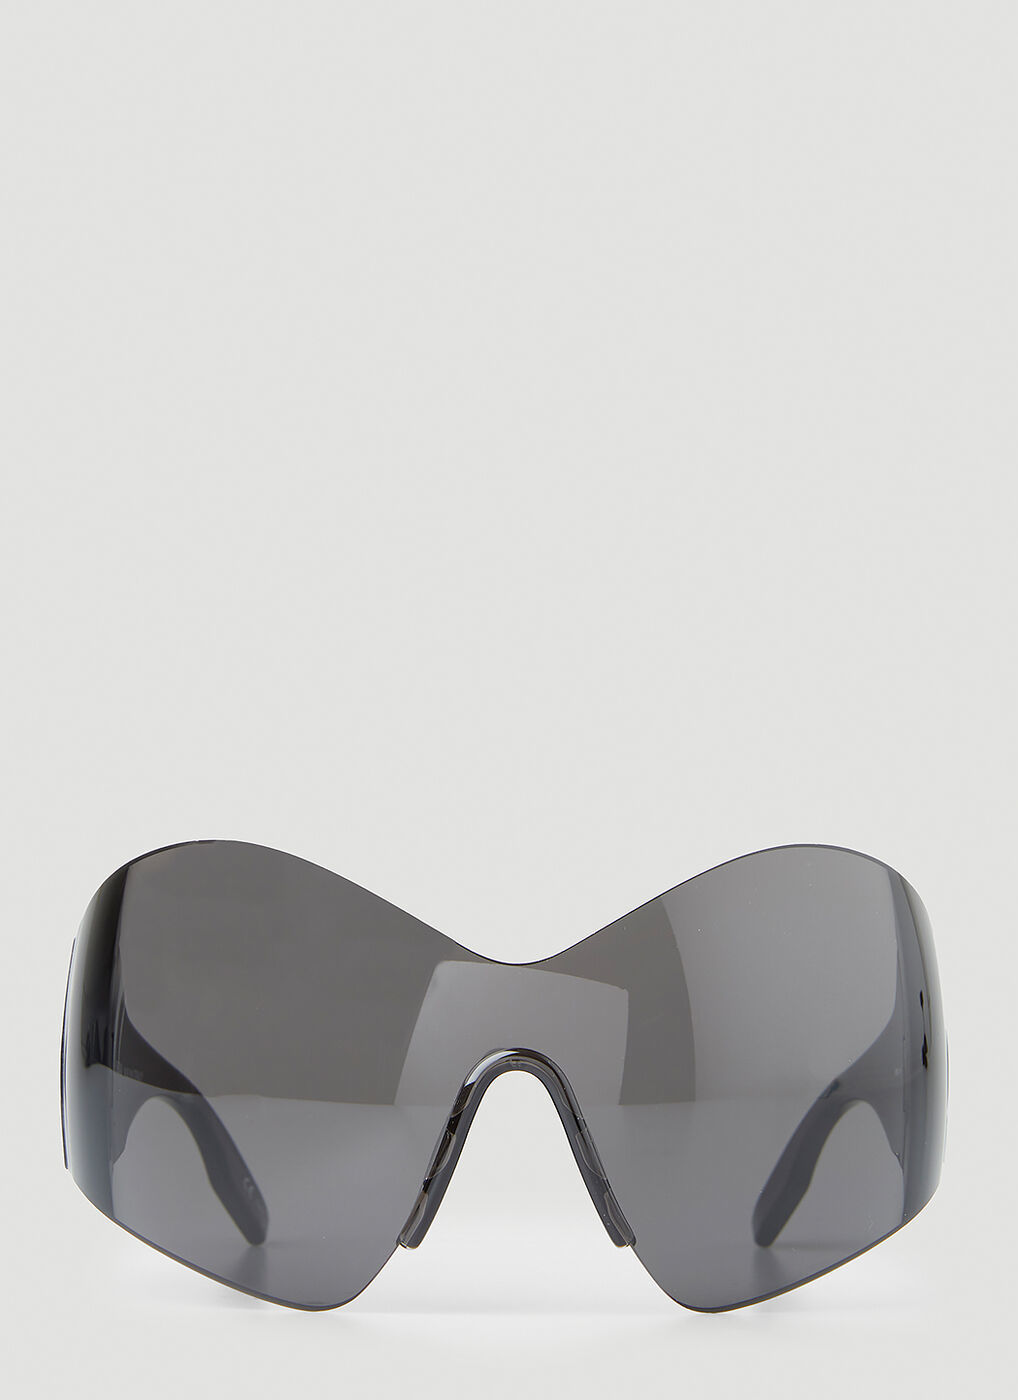 Mask Butterfly Sunglasses in Black Balenciaga